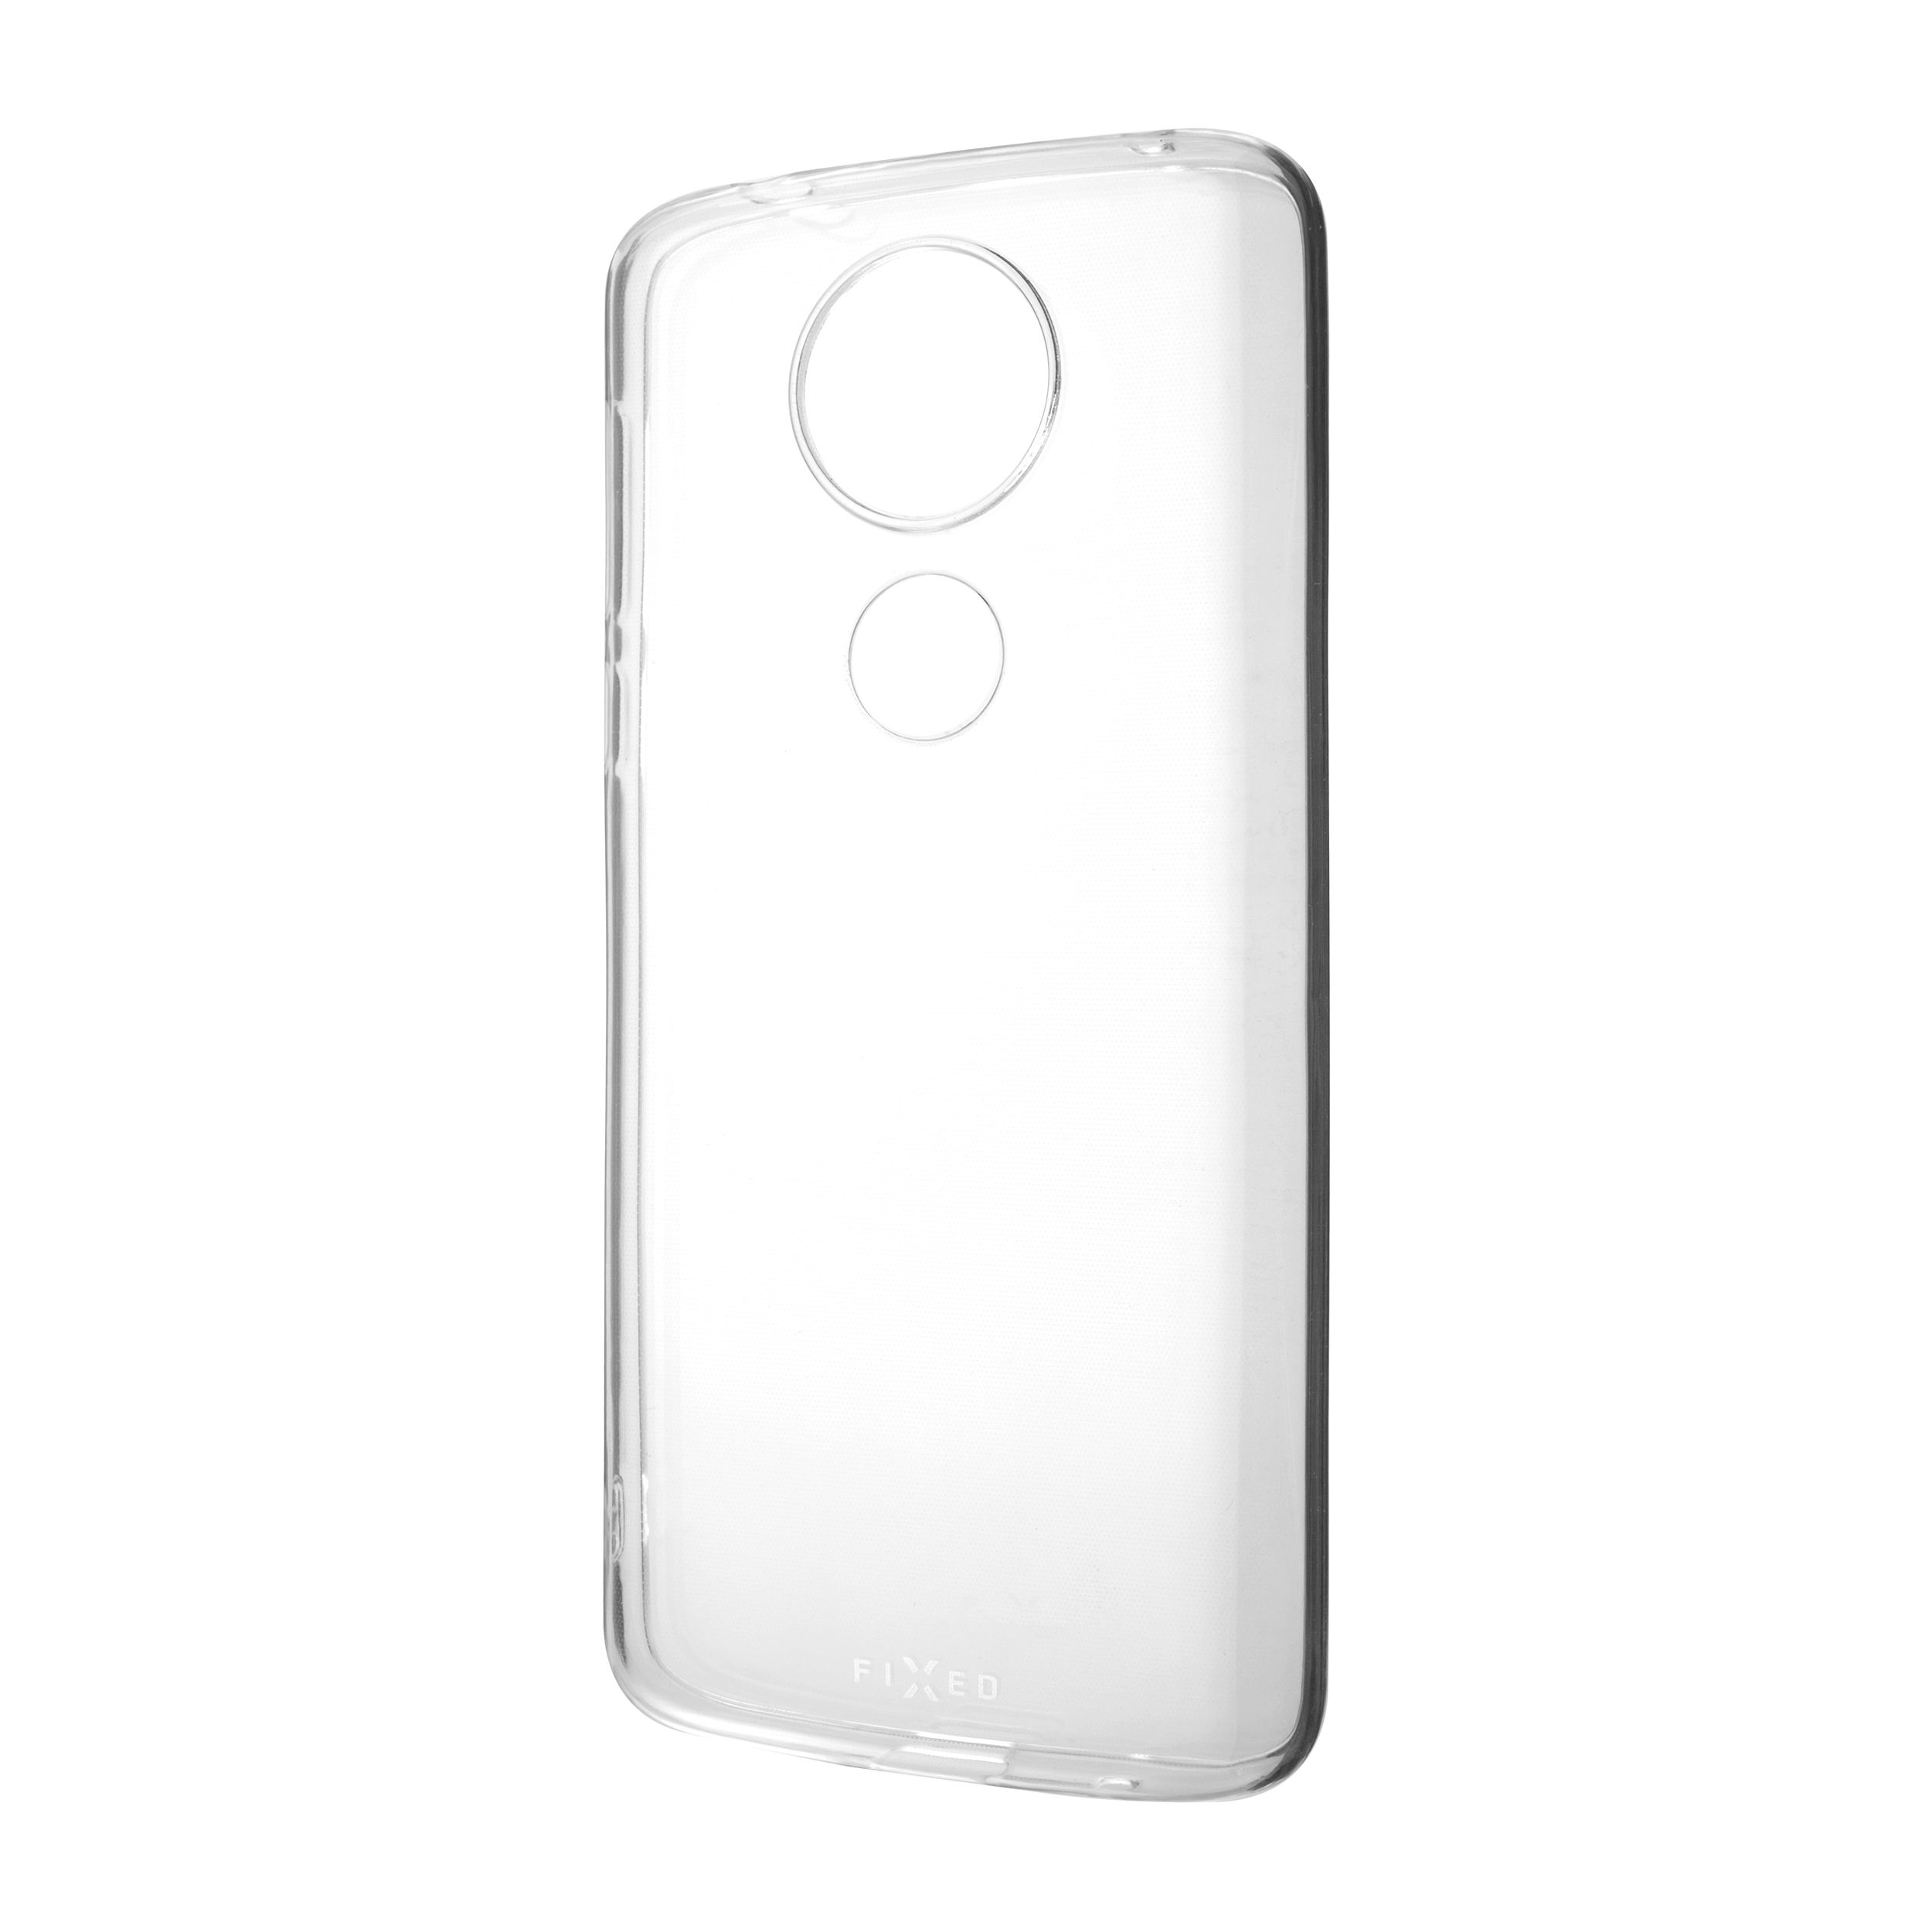 Silikonové pouzdro FIXED pro Motorola Moto G6 Play, čiré